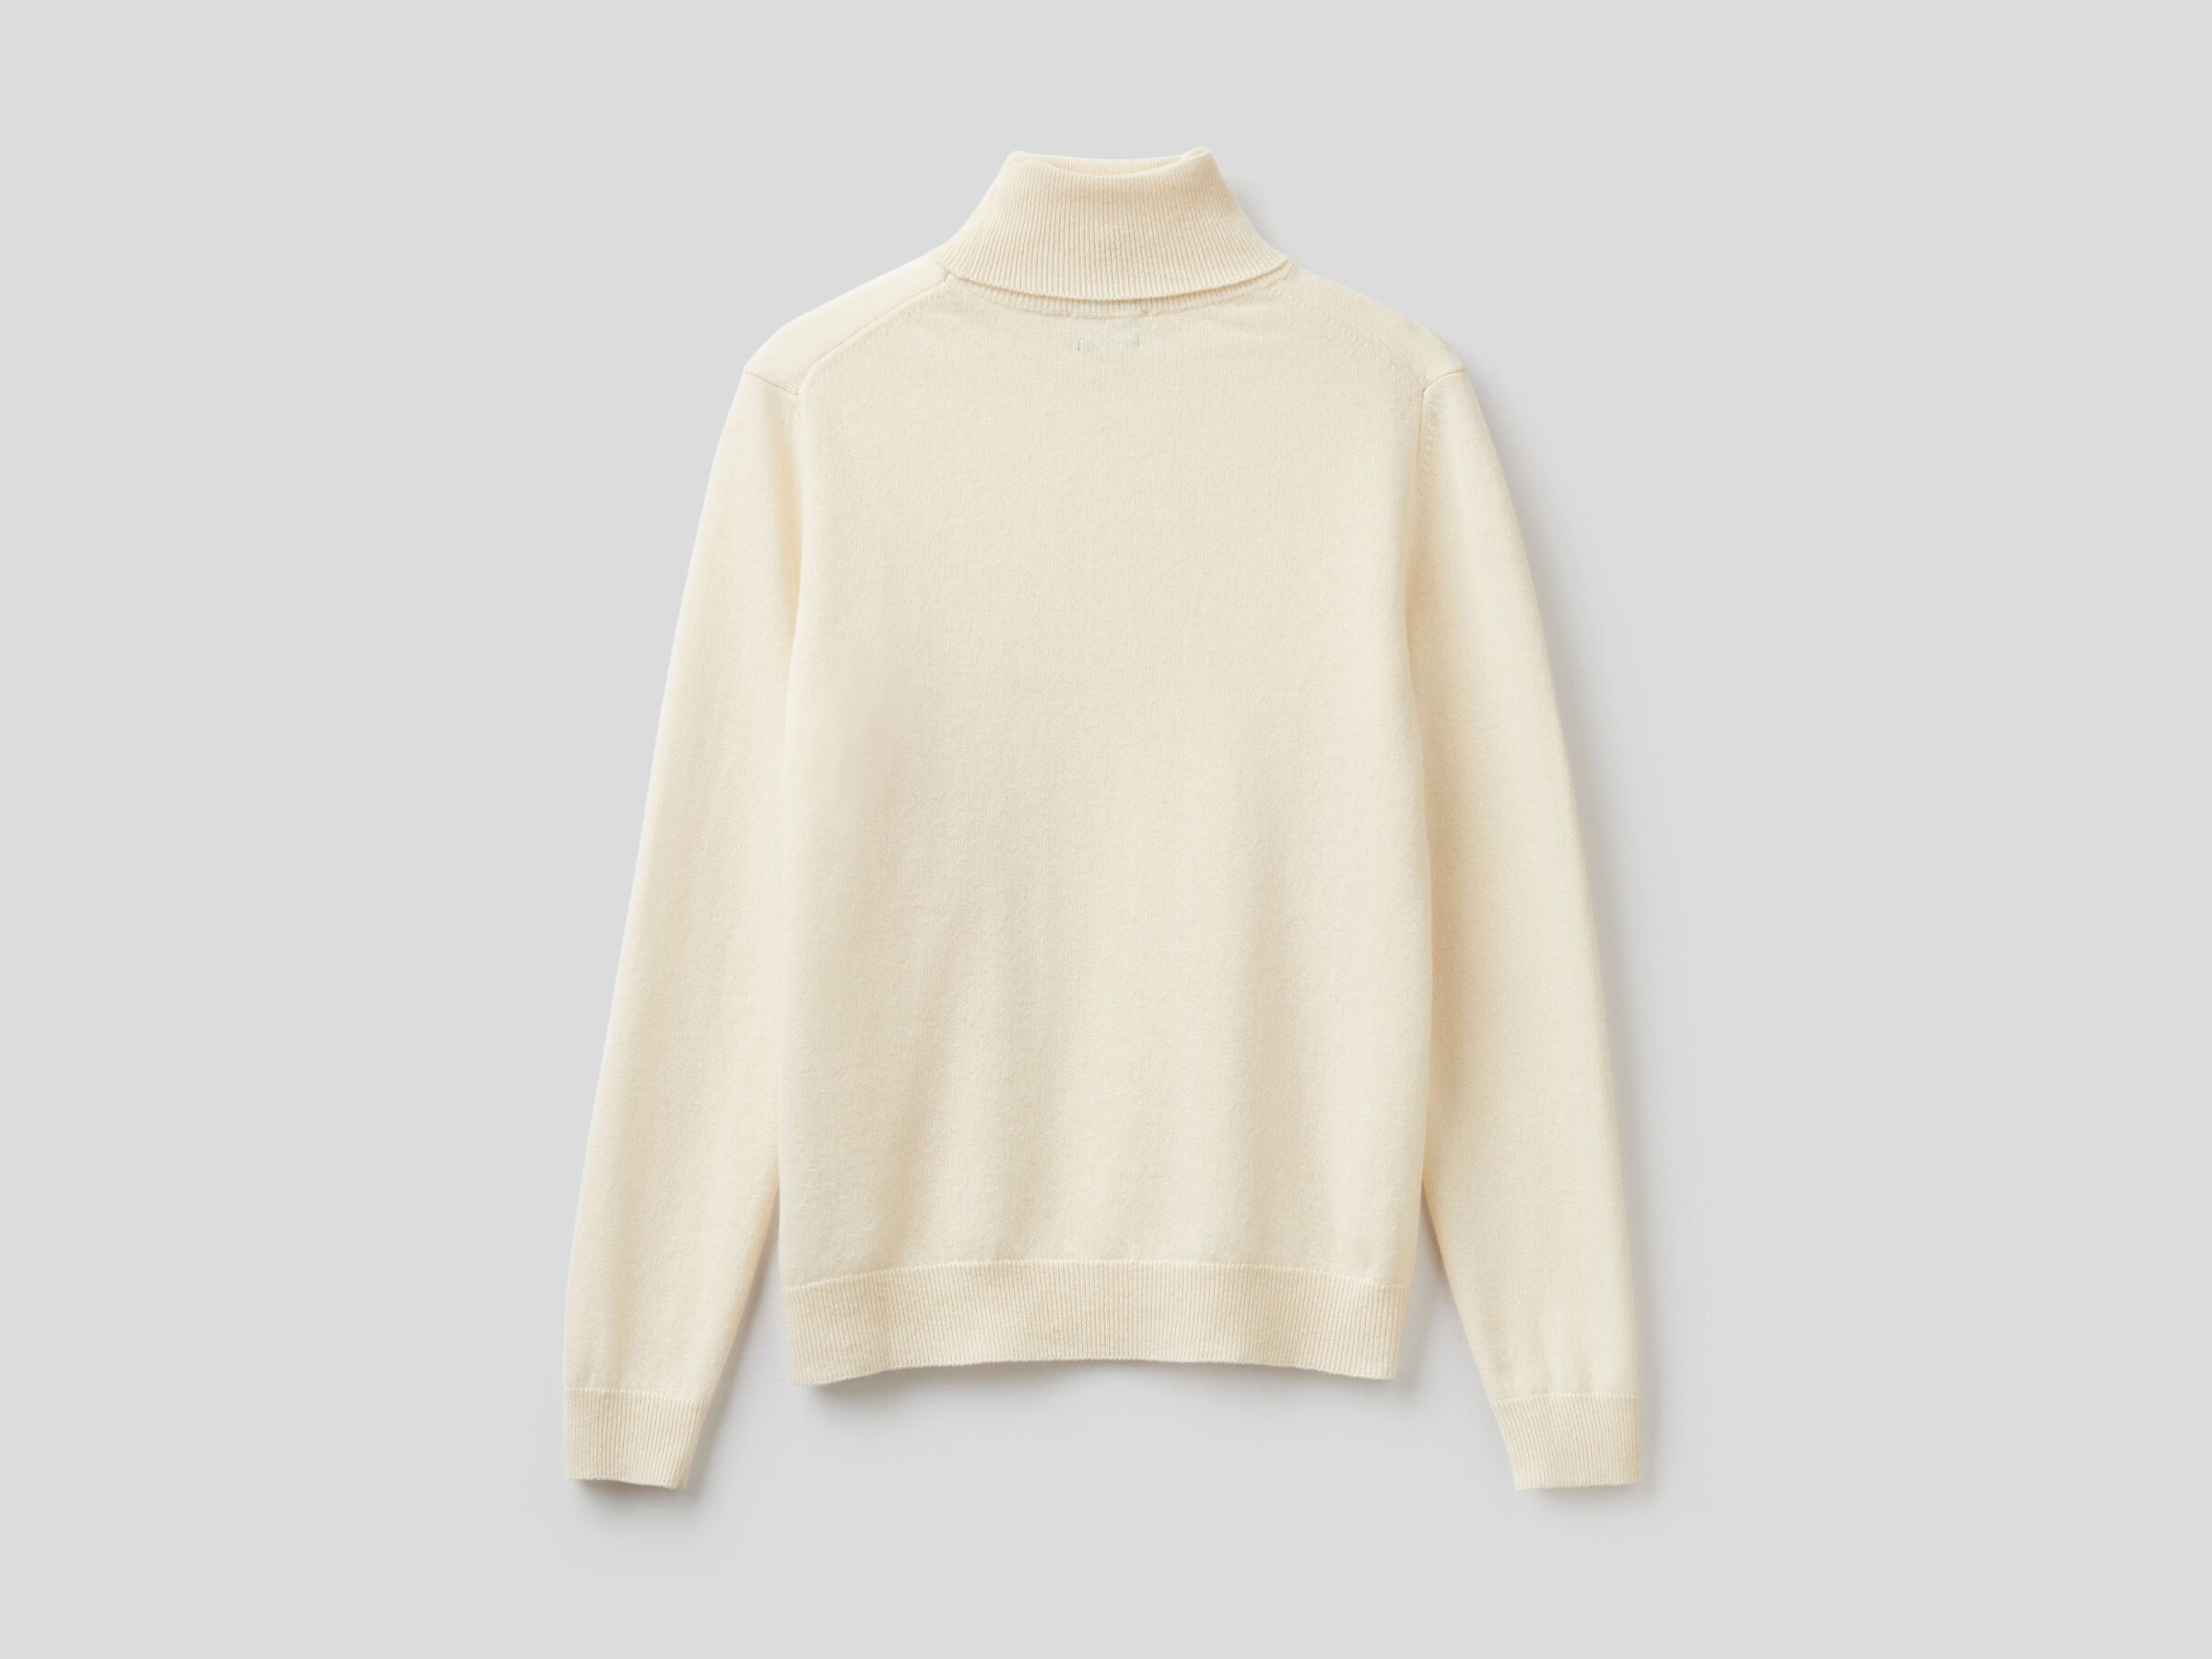 Cream turtleneck sweater in pure virgin wool